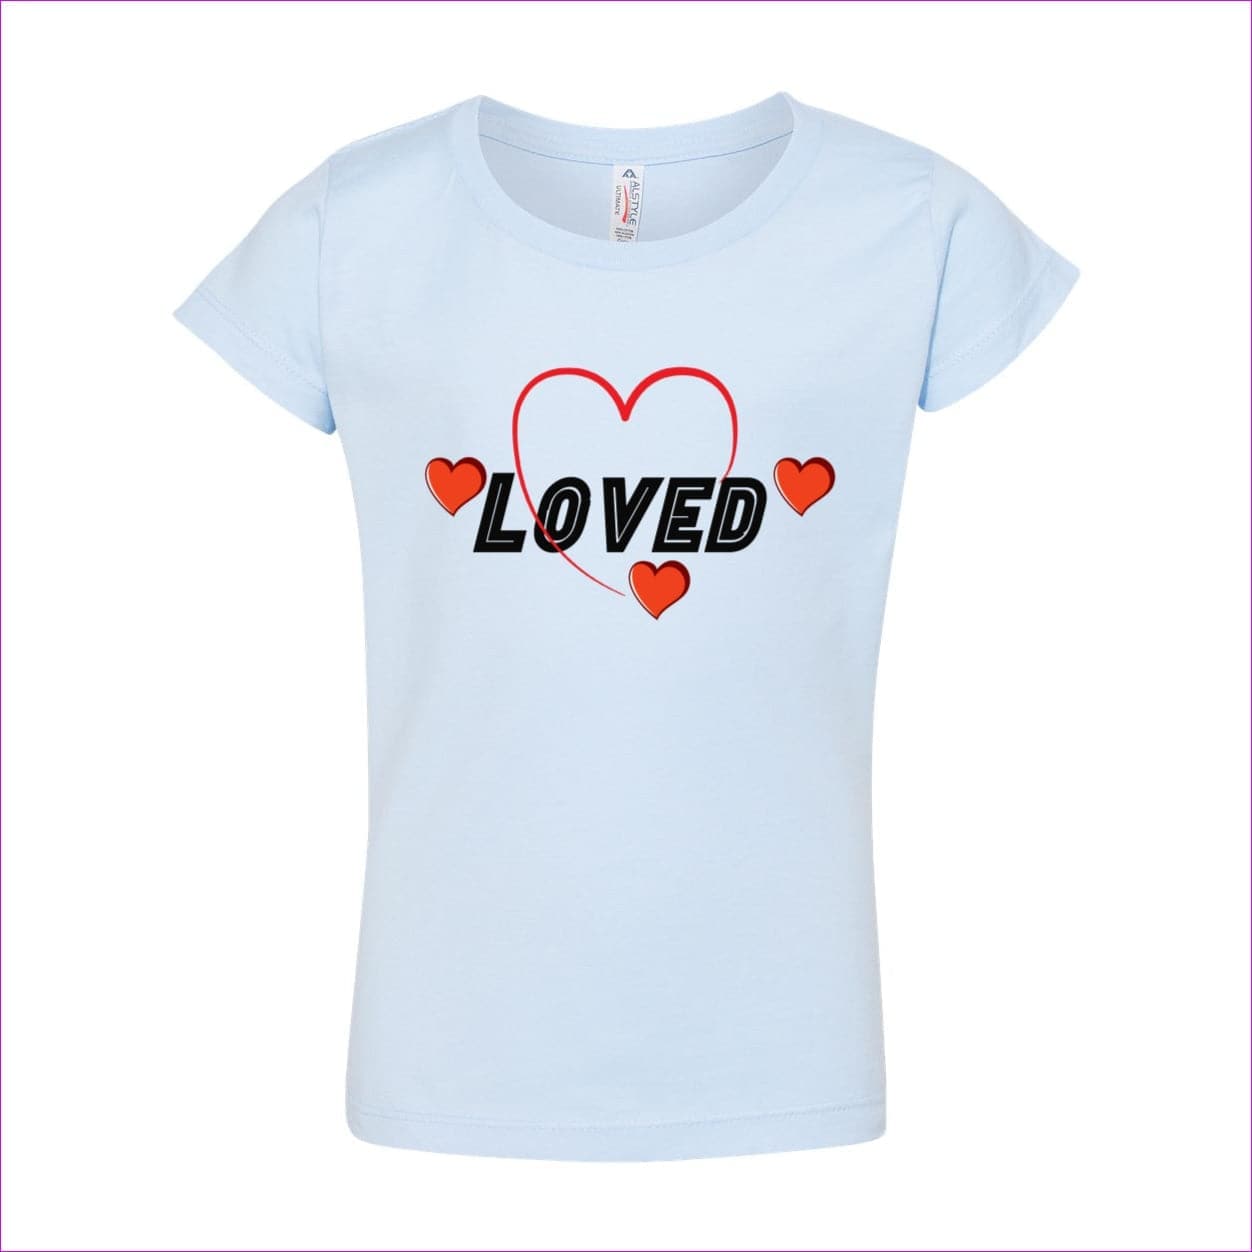 Powder Blue - Loved Girls’ Ultimate T-Shirt - kids t-shirts at TFC&H Co.